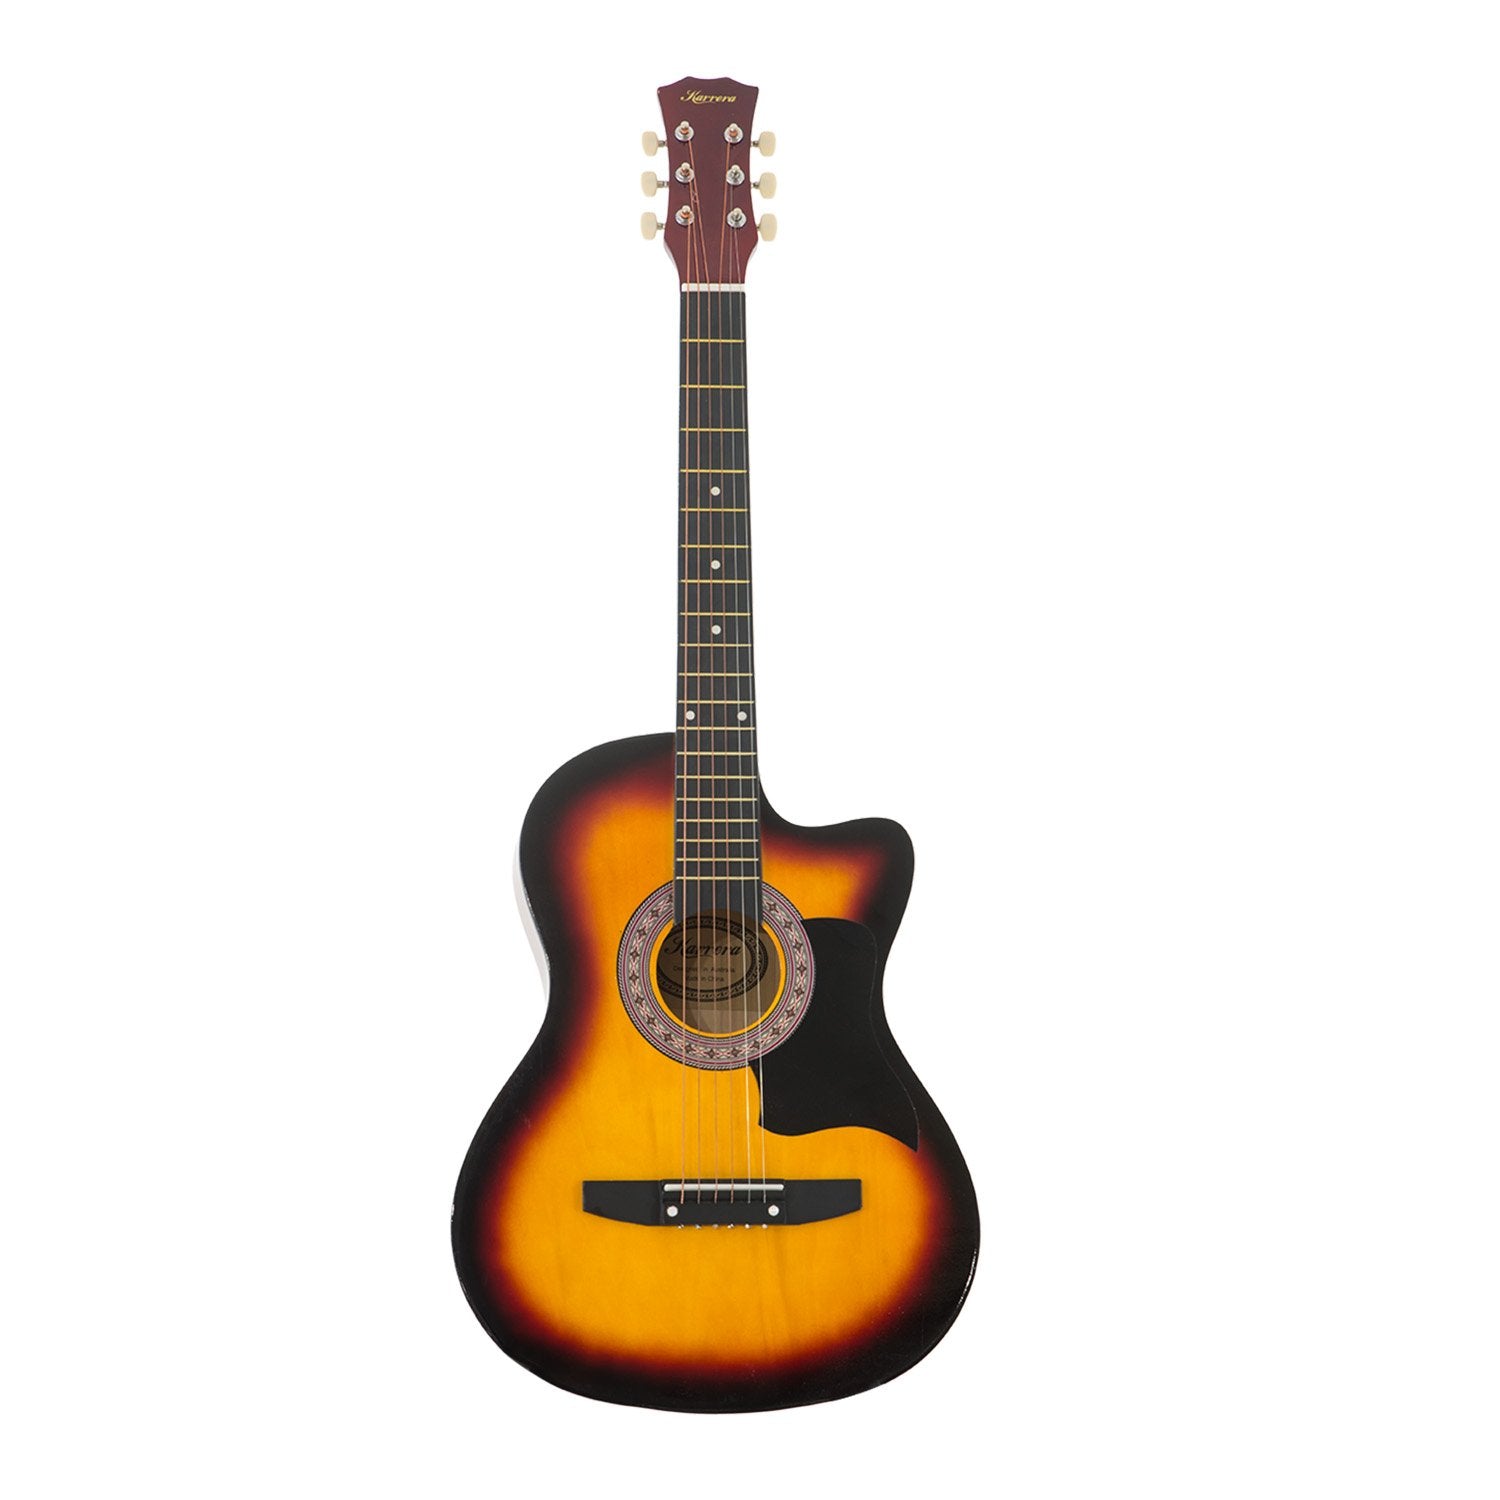 Karrera 38in Pro Cutaway Acoustic Guitar with Bag Strings - Sun Burst - SILBERSHELL